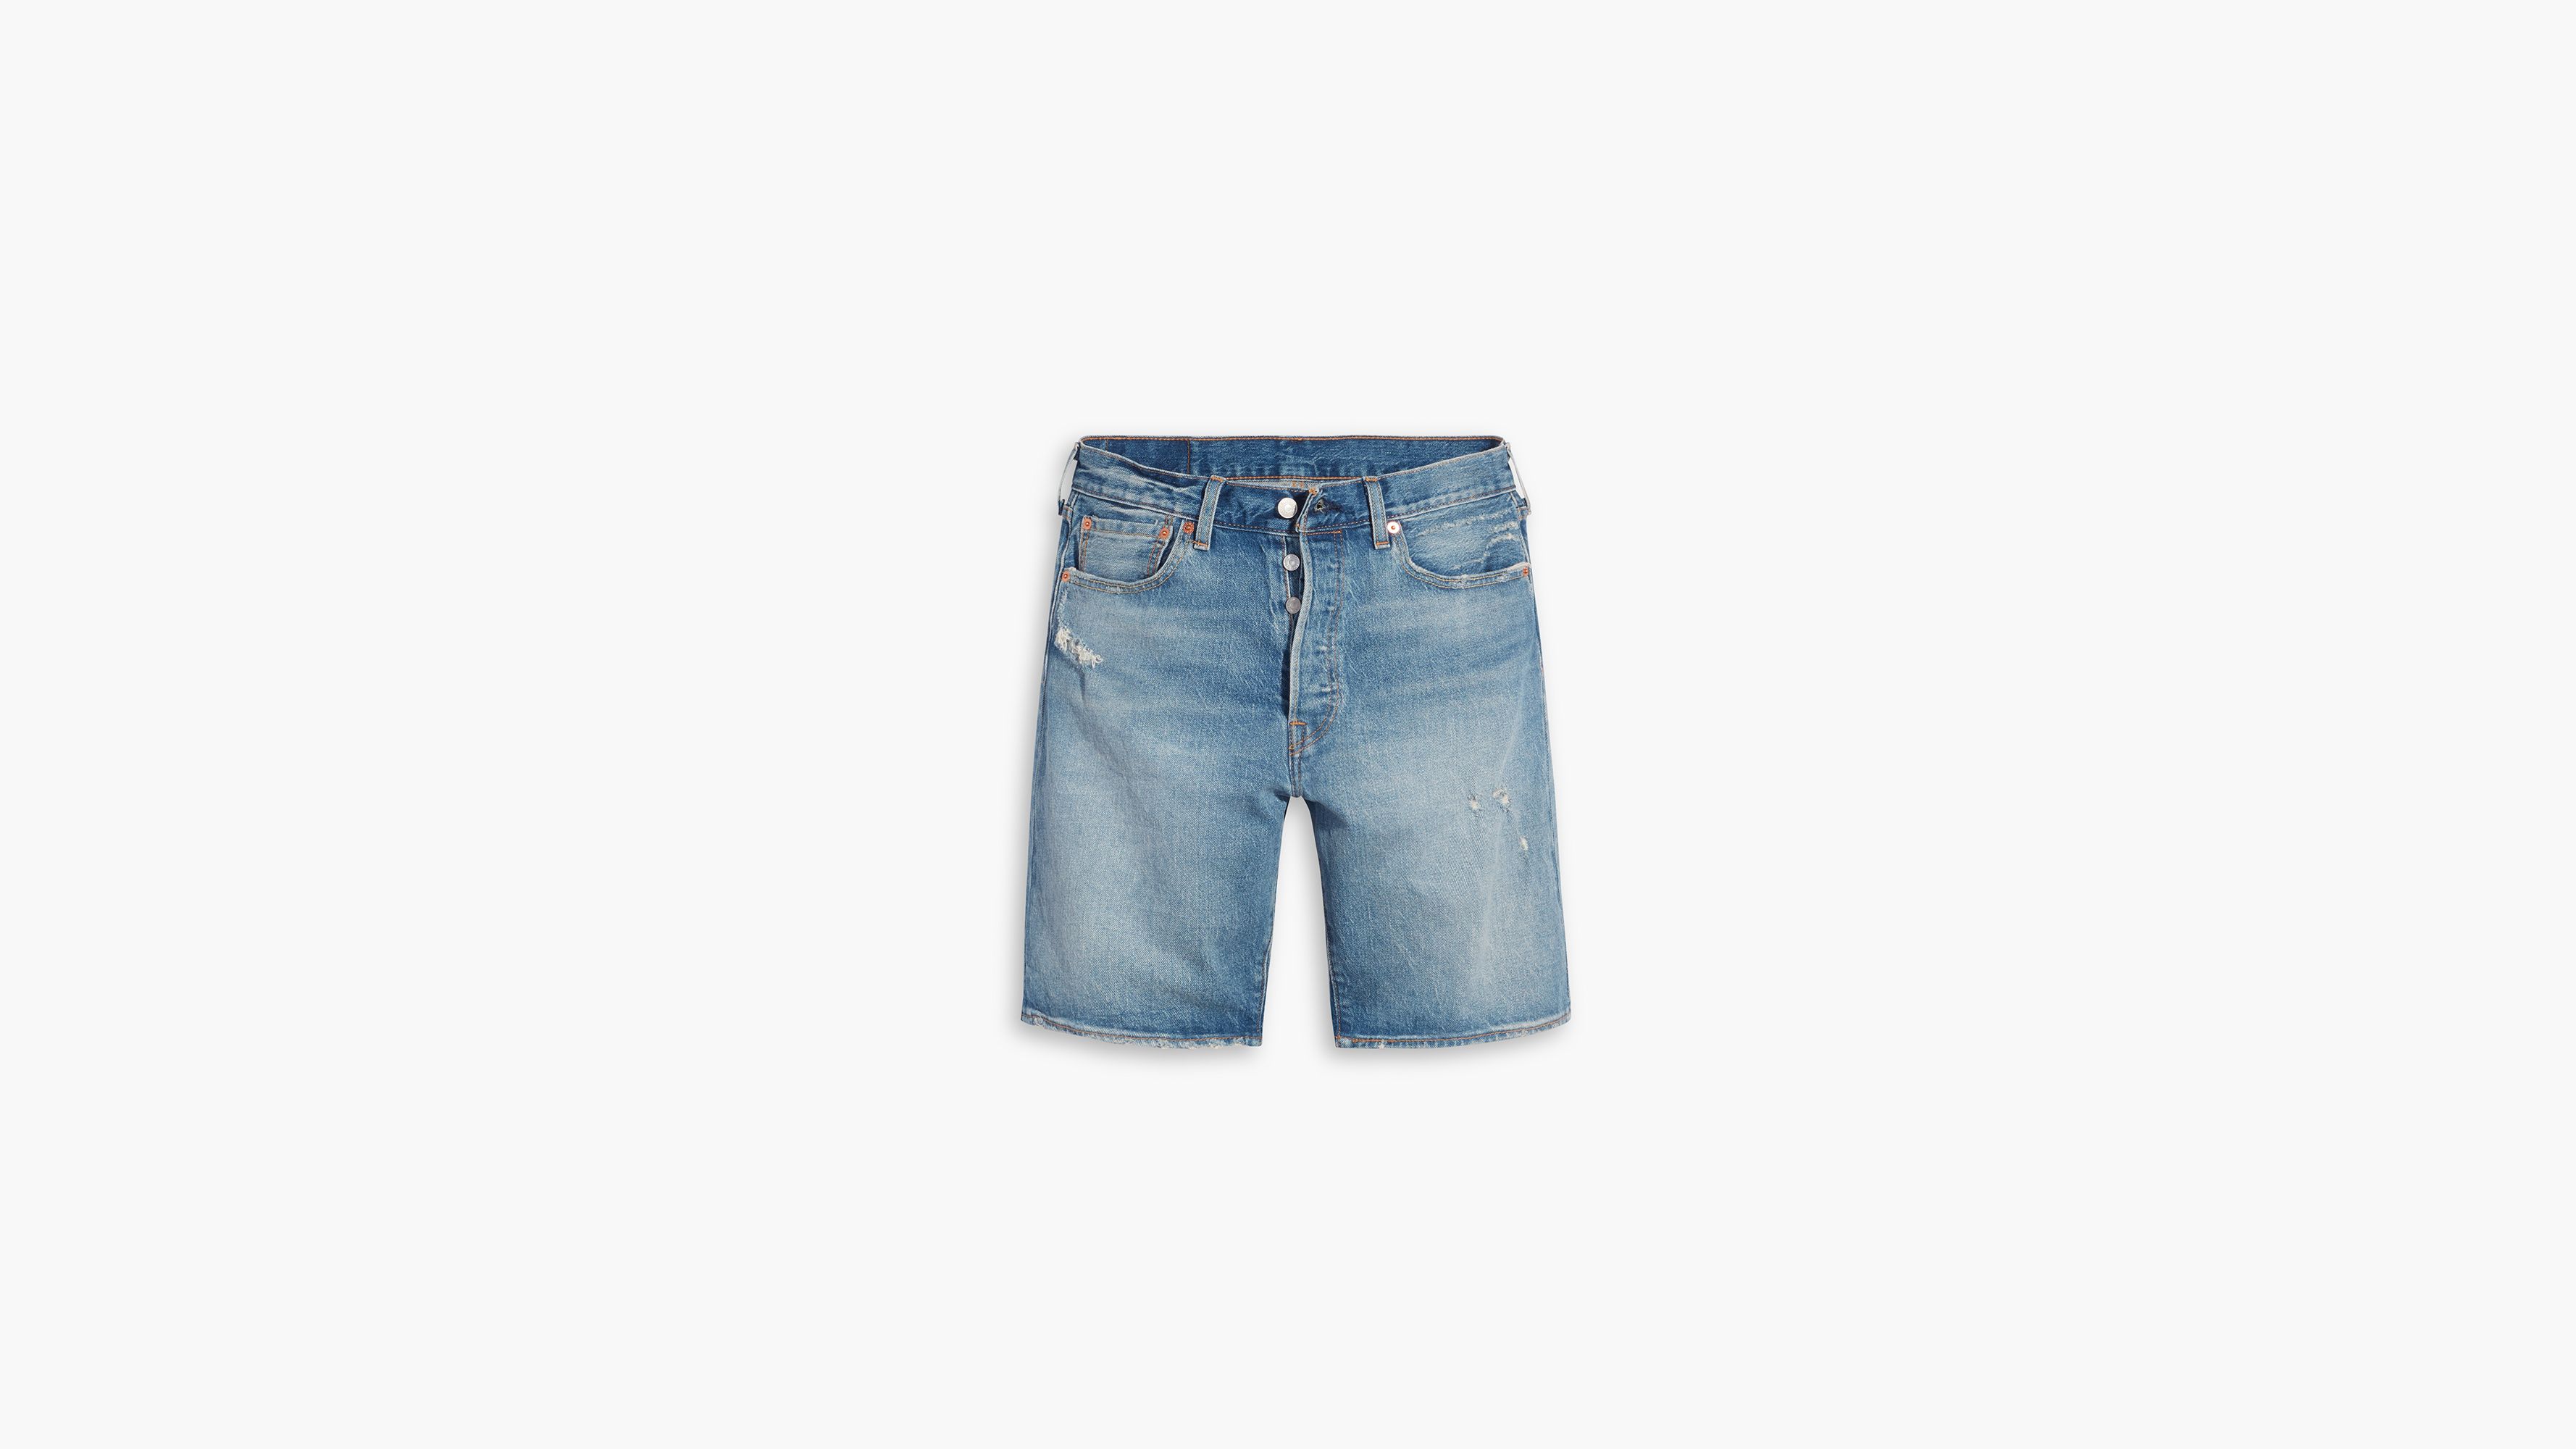 Buy LEVI'S 501 Original Fit Shorts 38x9 - Darkest Spruce At 28% Off